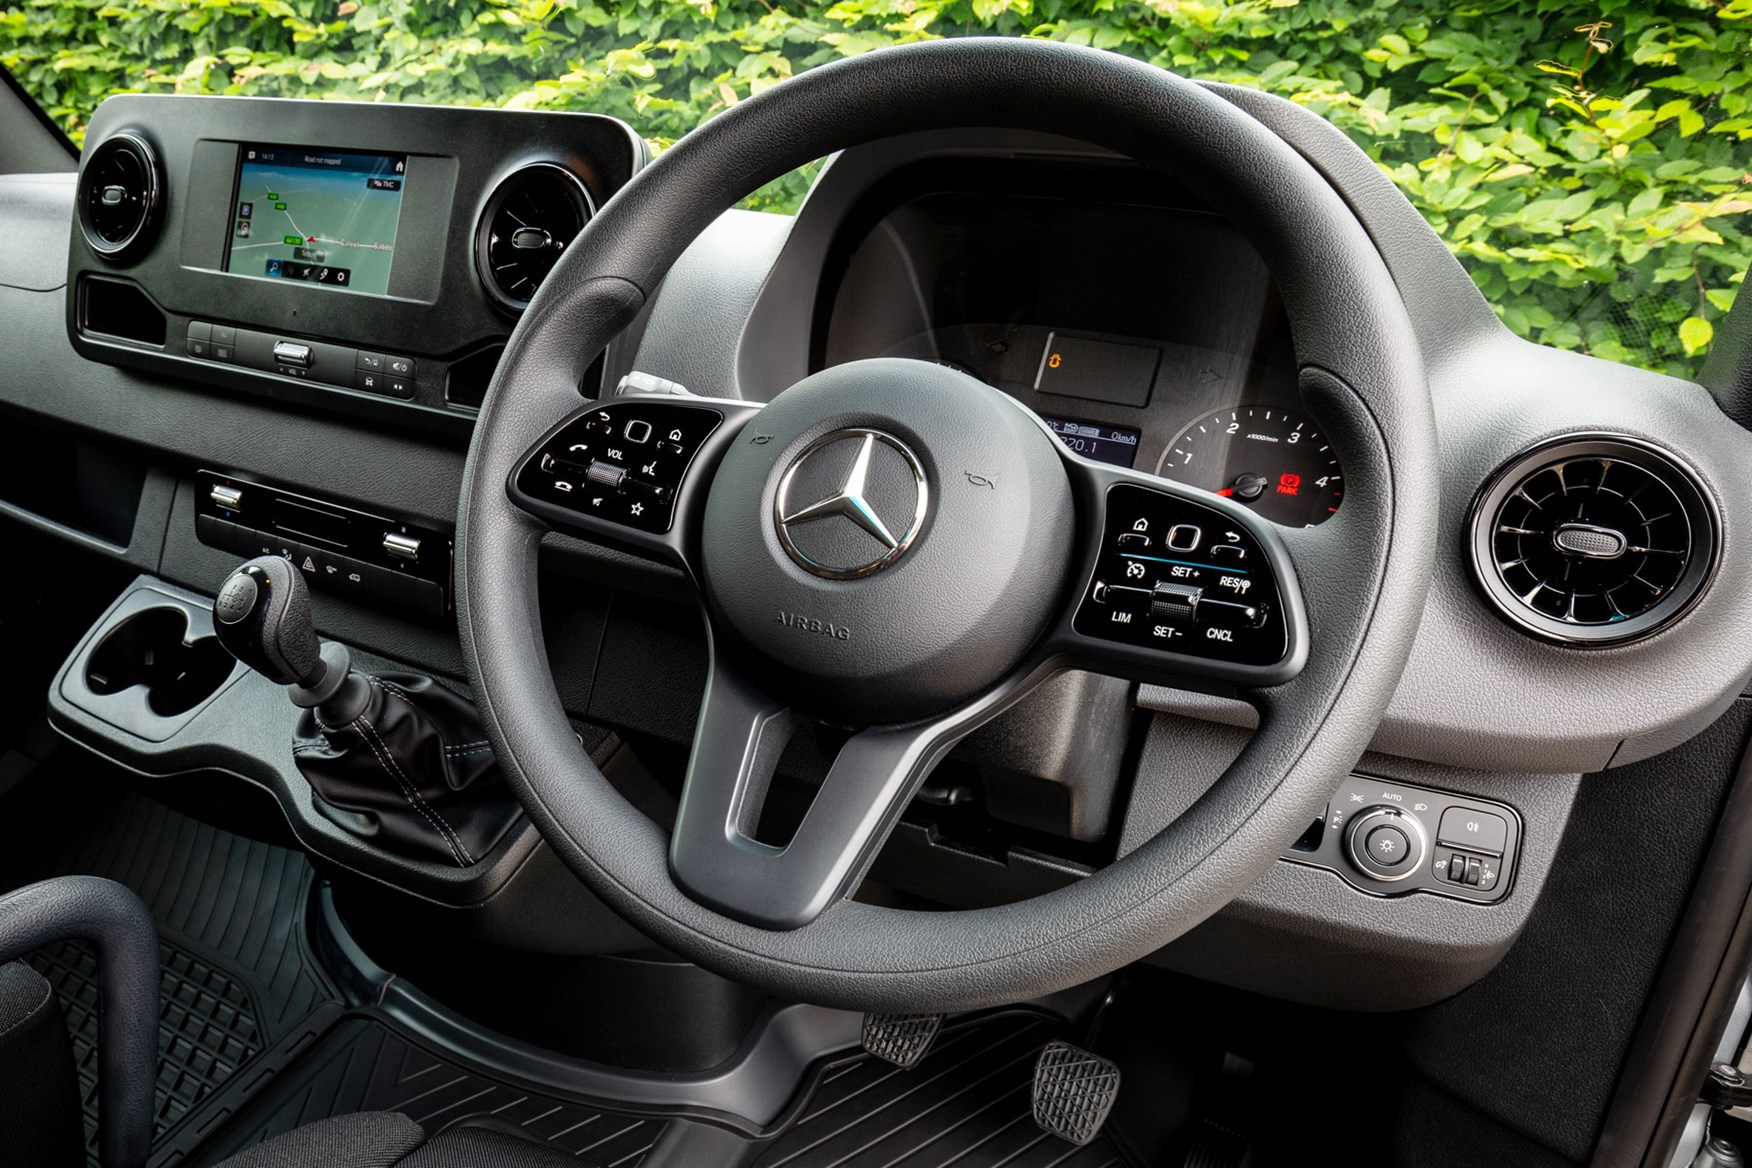 Mercedes Benz Sprinter Review 2020 Parkers